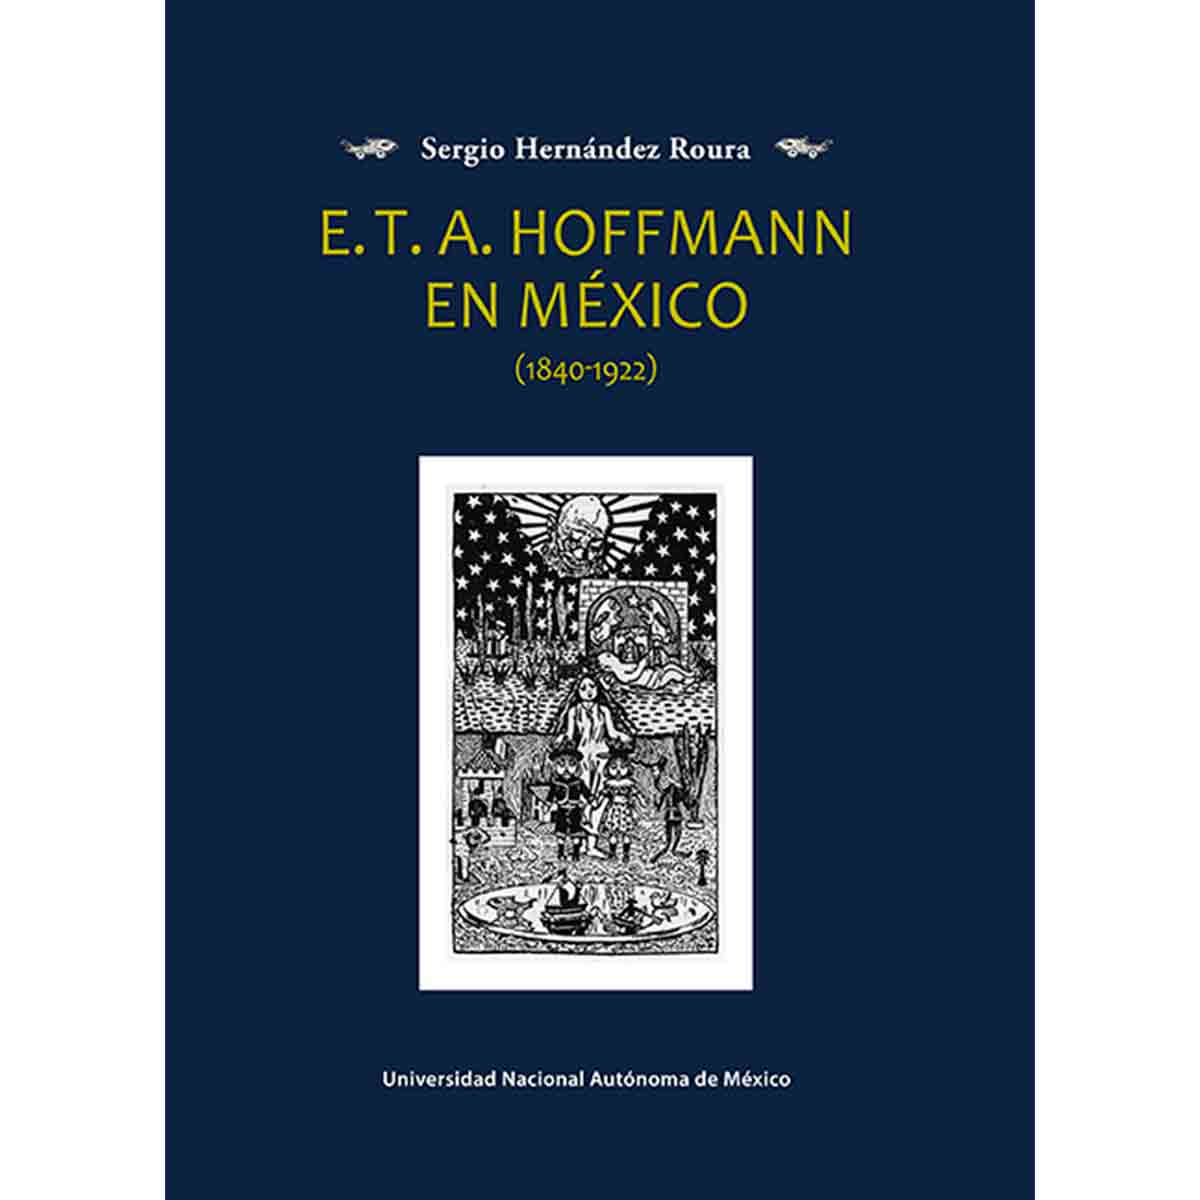 E.T.A. HOFFMANN EN MÉXICO (1840-1922)